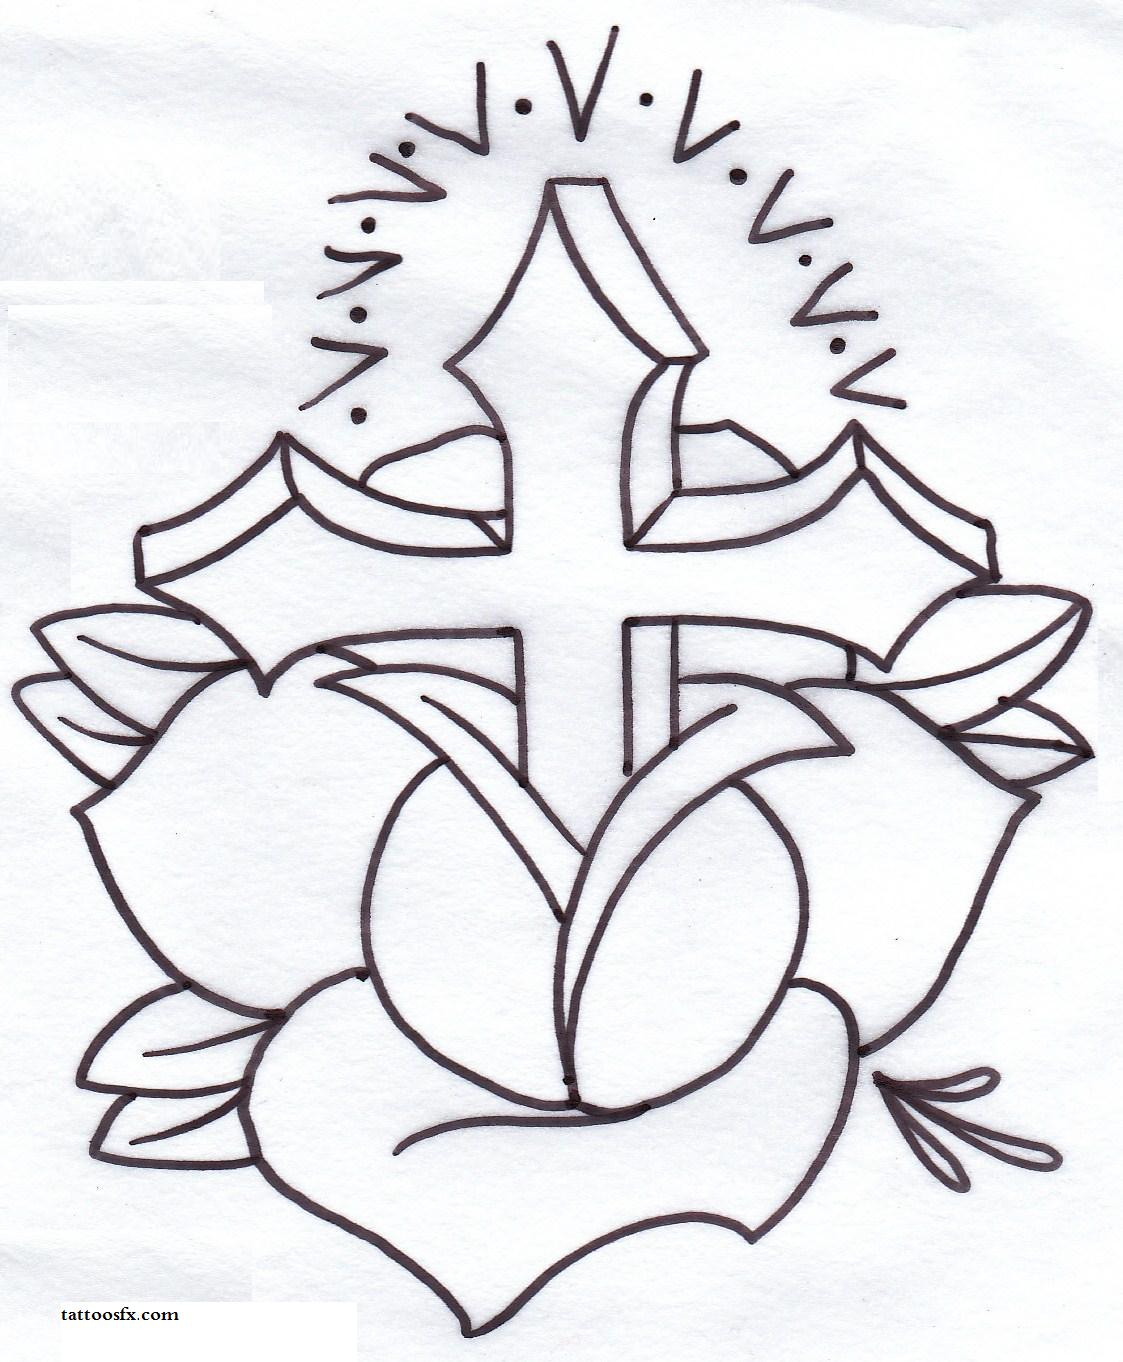 Tattoo Drawings Of Crosses$#@^